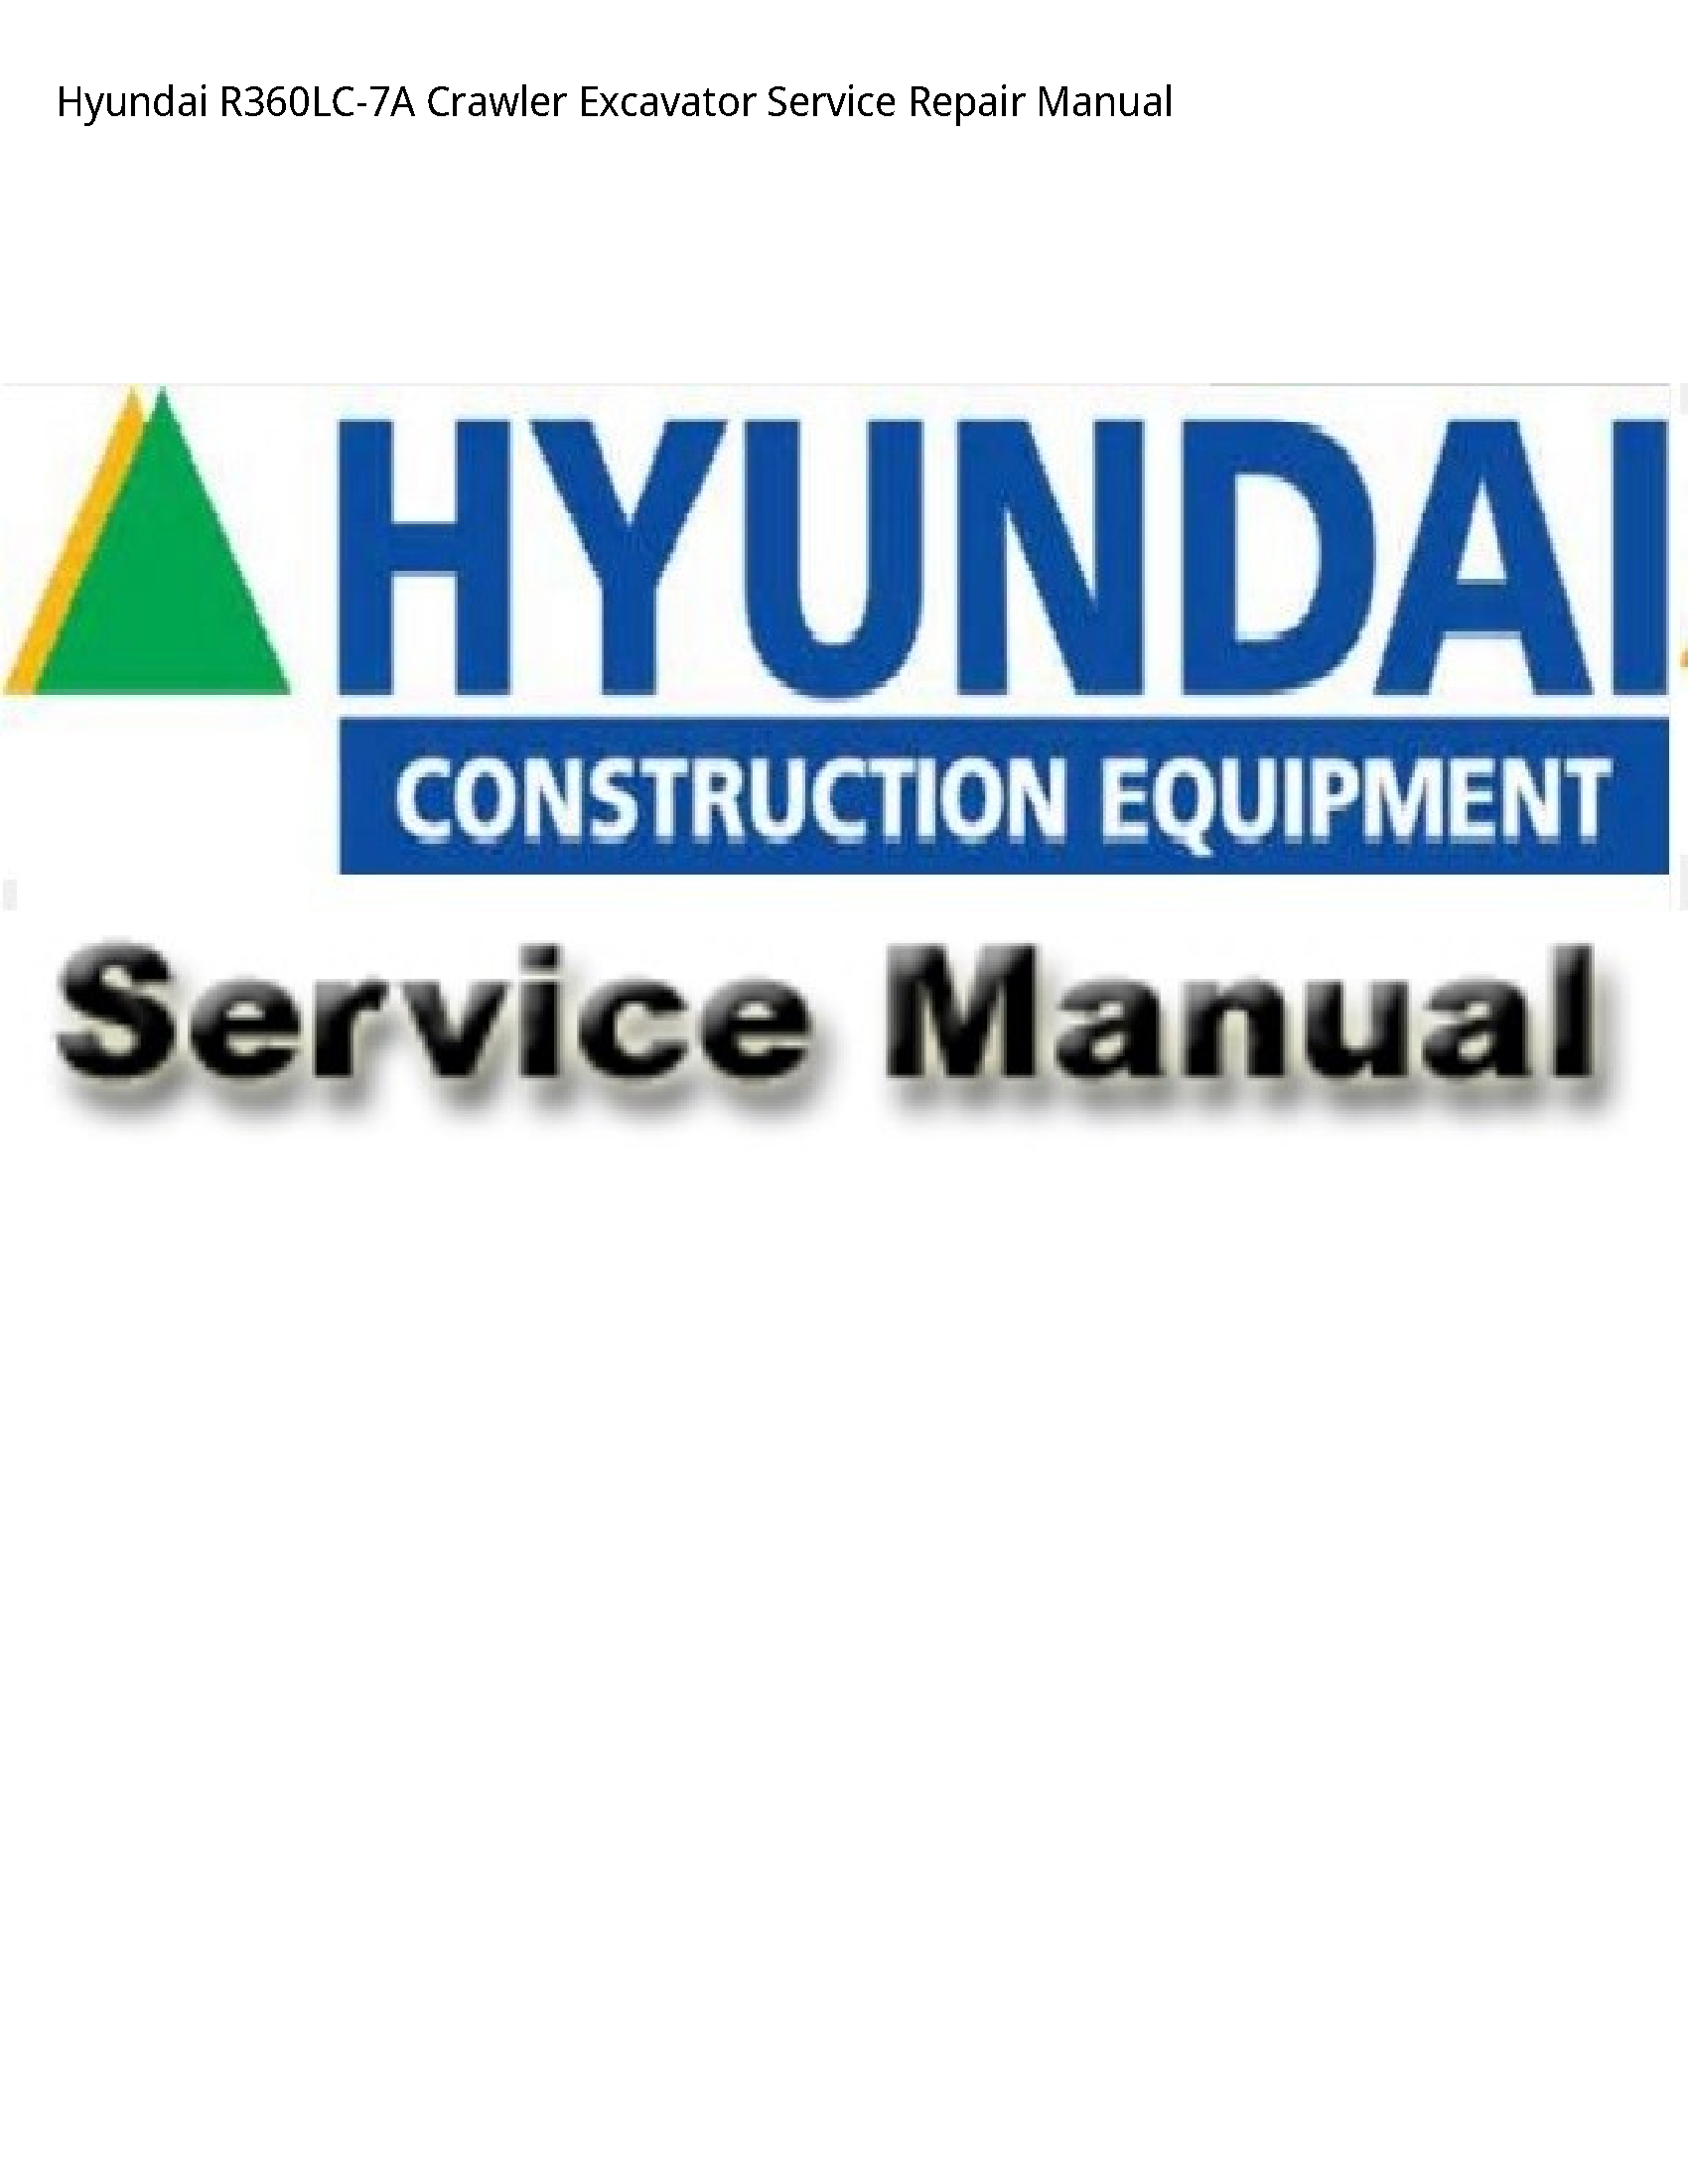 Hyundai R360LC-7A Crawler Excavator manual